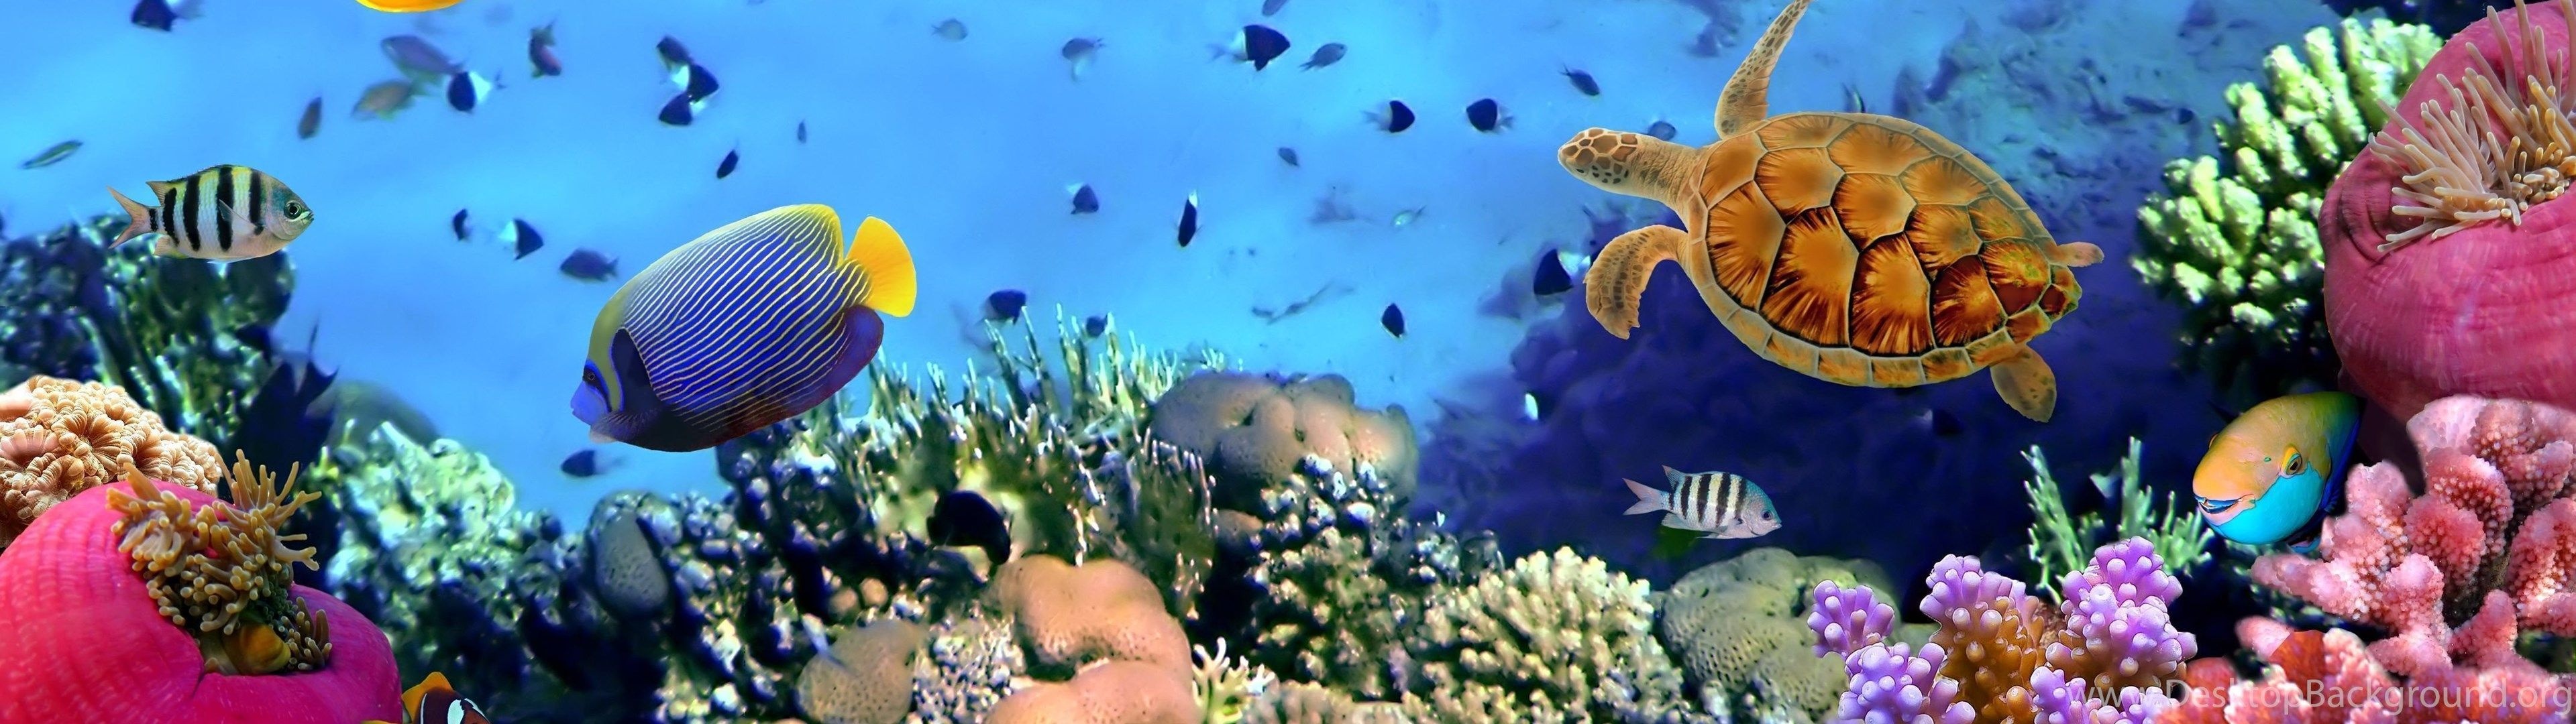 Aquarium HD wallpaper, Dual monitor setup, Stunning underwater scene, High-resolution background, Immersive visual experience, 3840x1080 Dual Screen Desktop